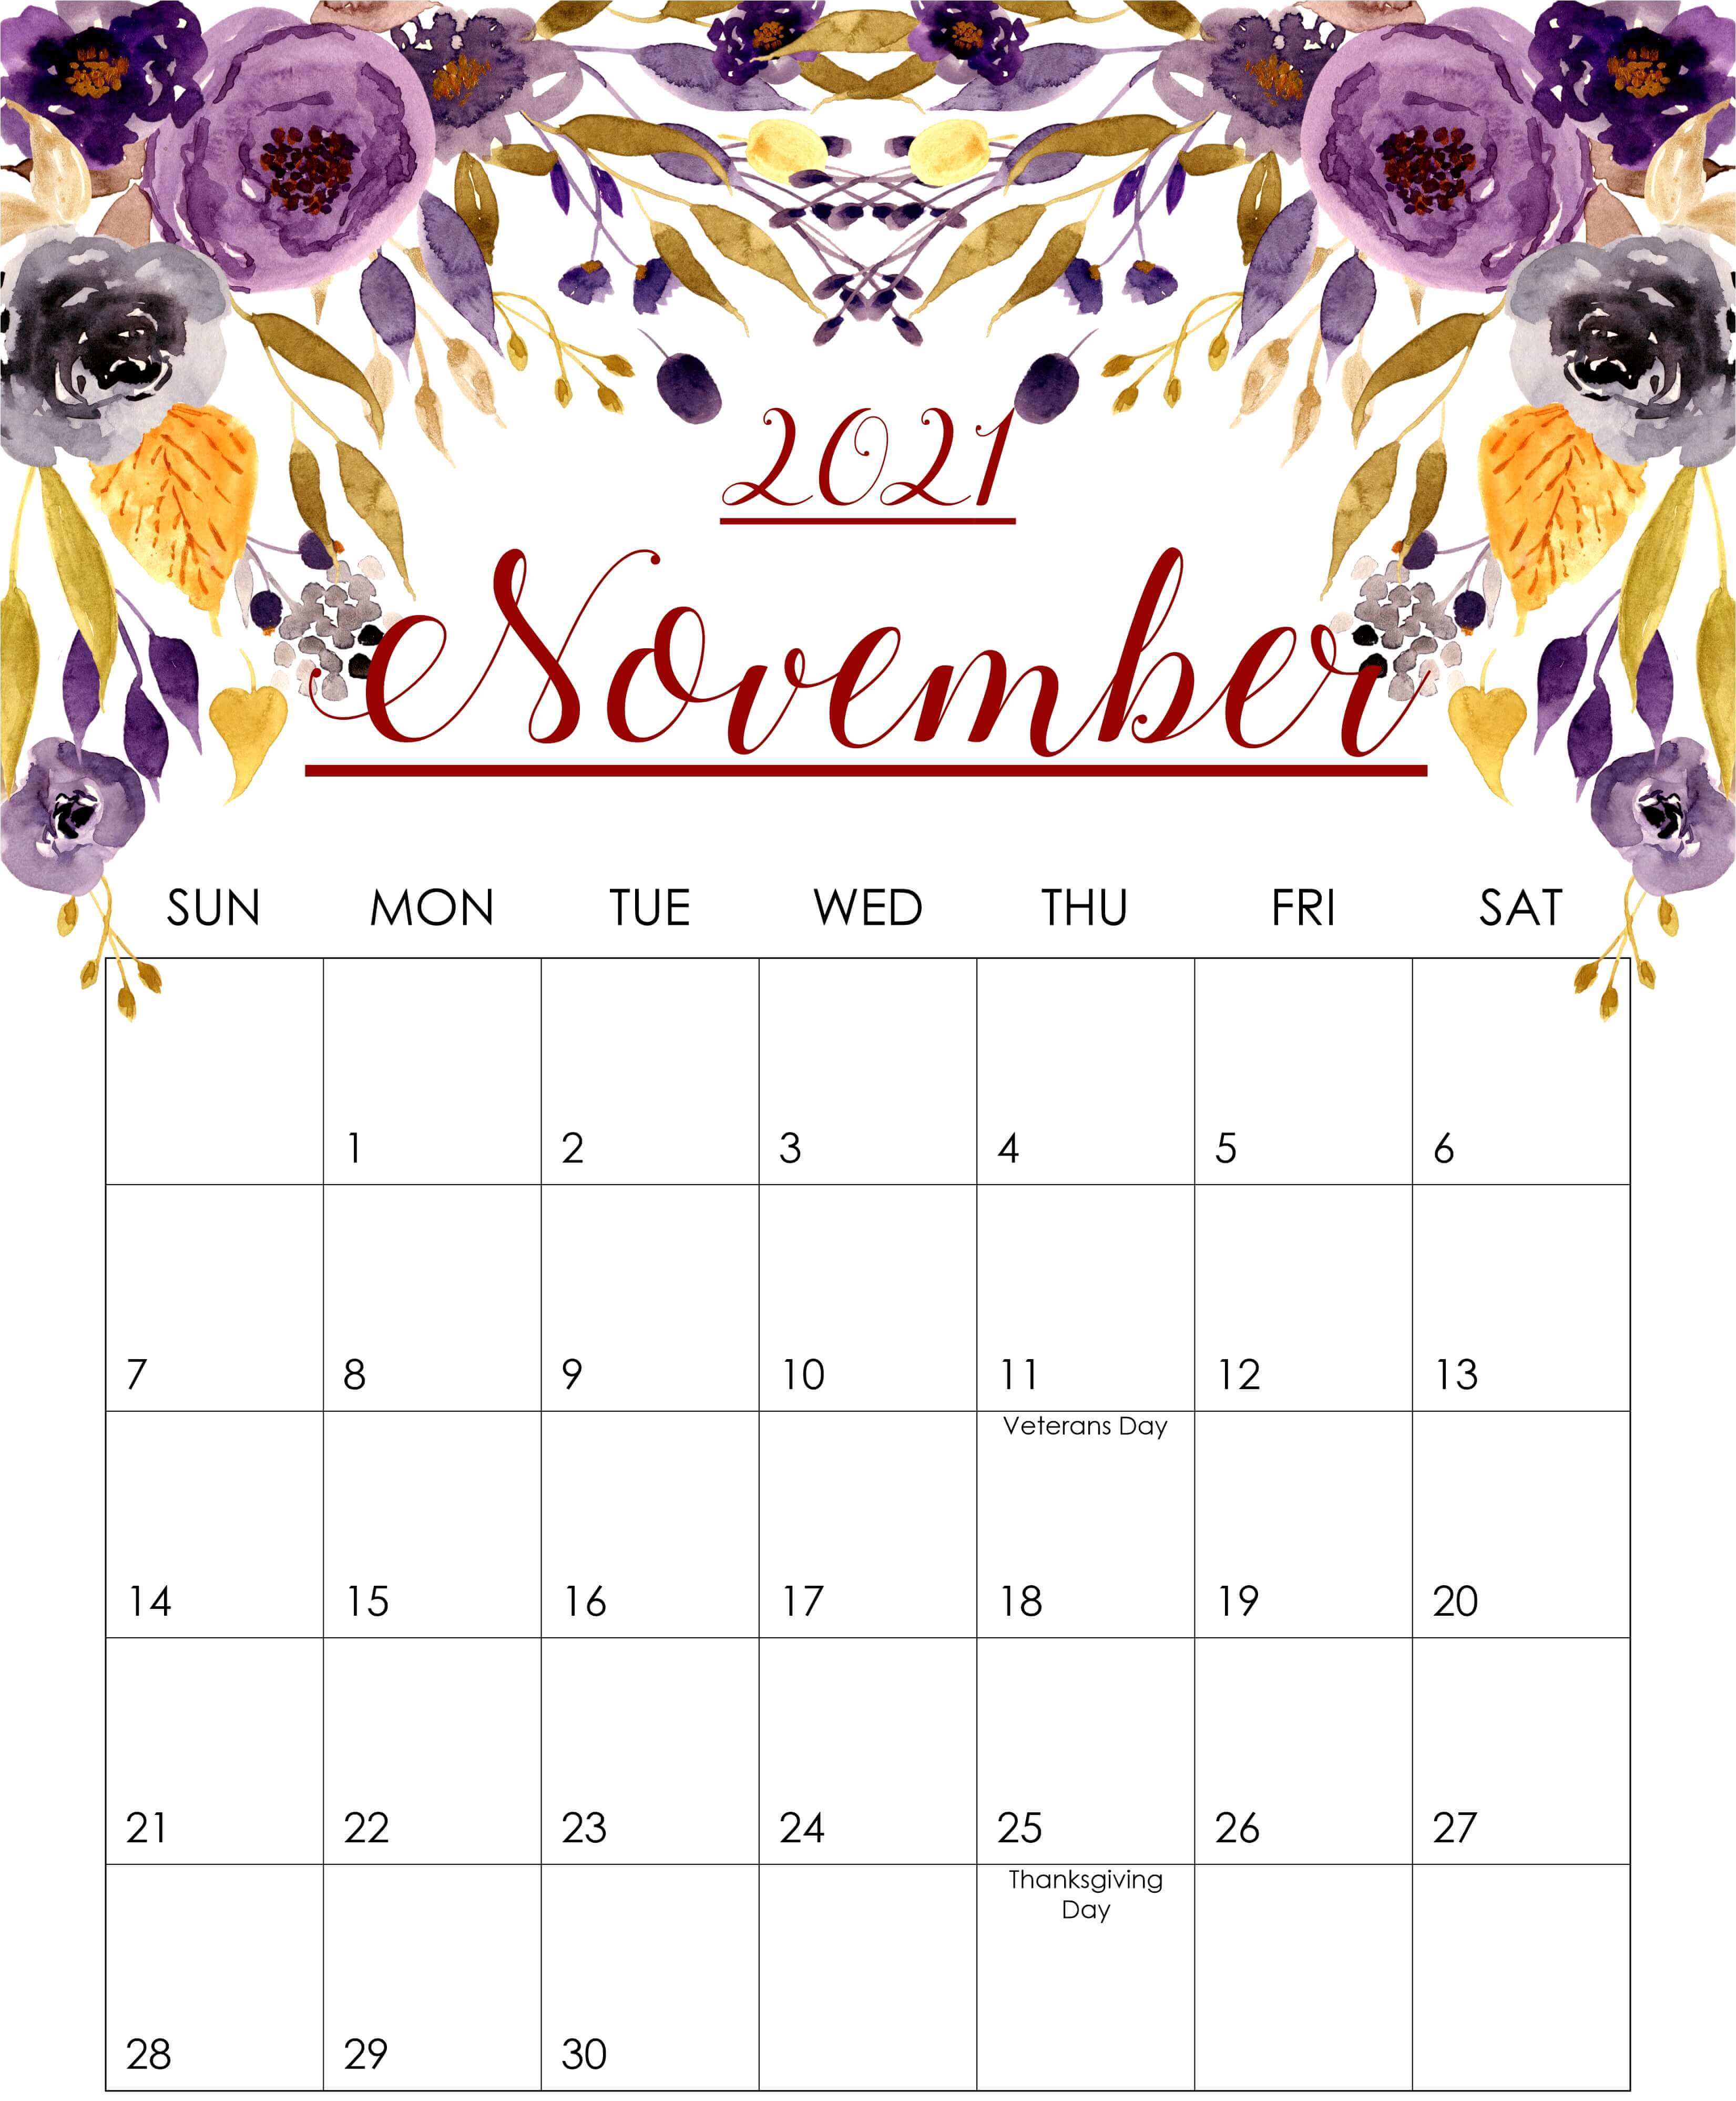 Decorative November 2021 Calendar Floral